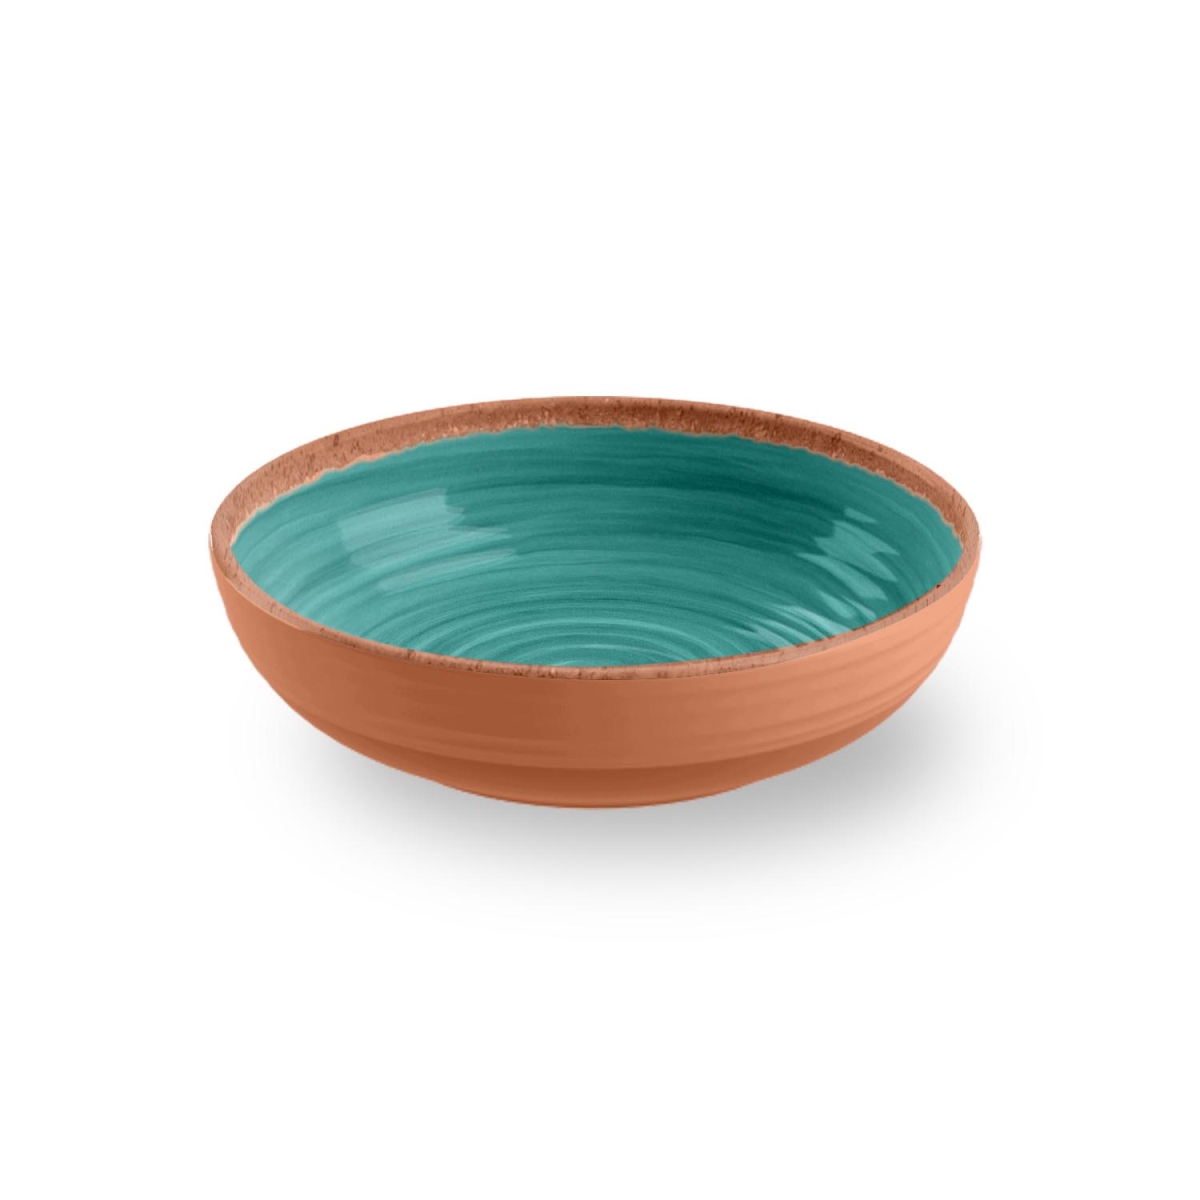 Pan5080lbtbt Rustic Swirl Bowl, Set Of 6 - Turquoise